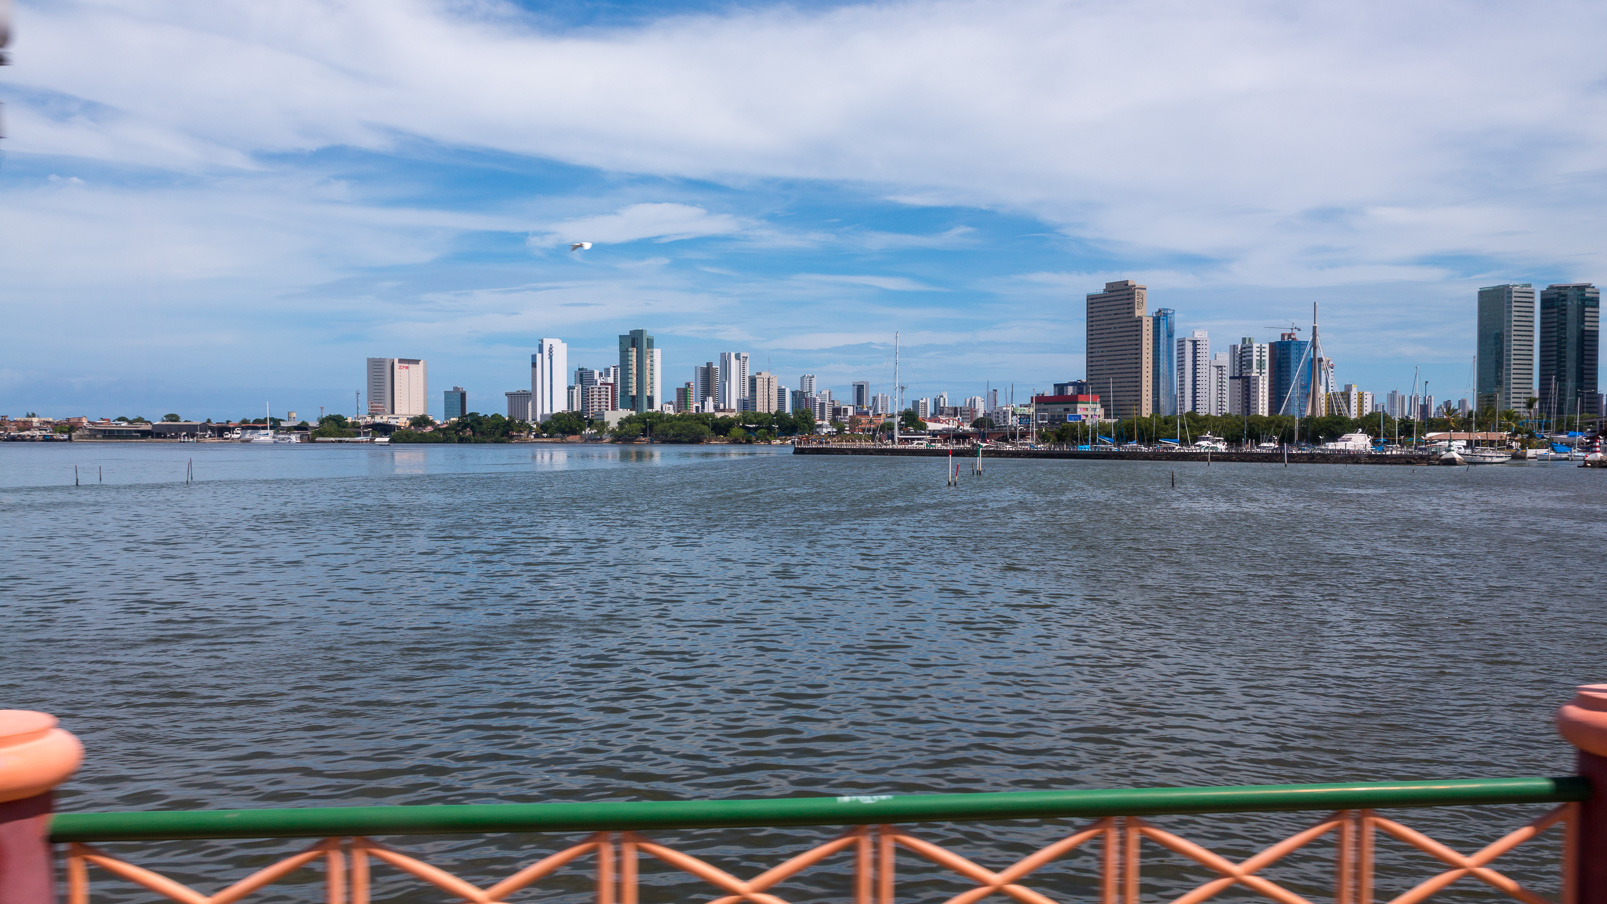 La ville moderne de Recife